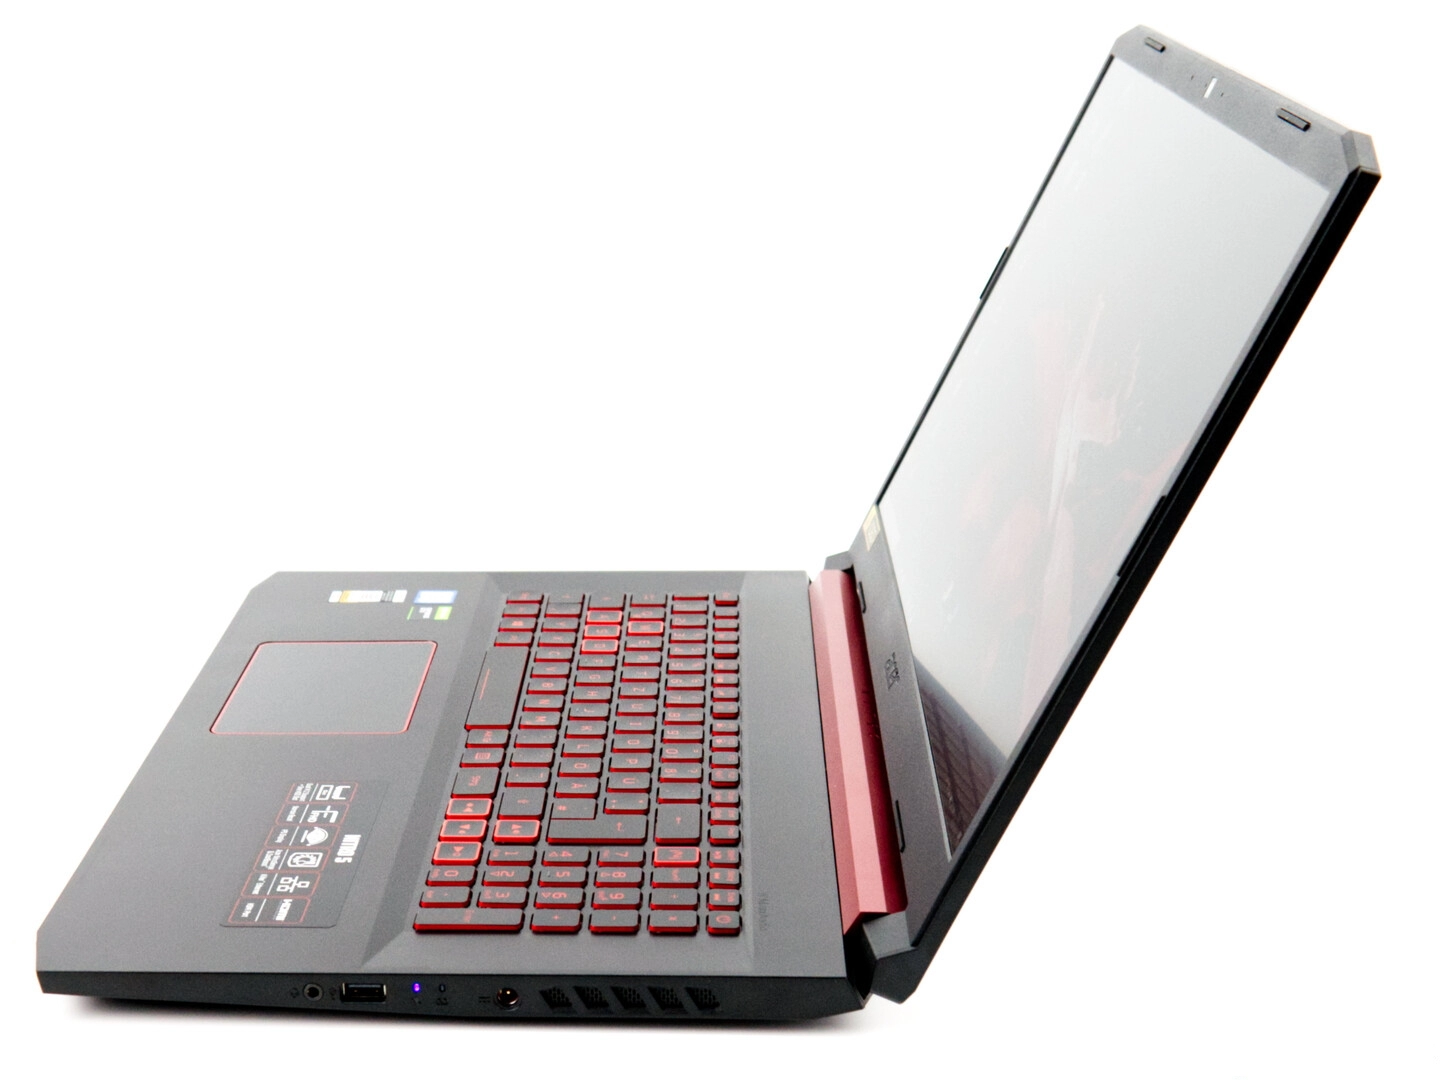 Laptop Acer Nitro AN517-51-7037, 16 GB, DOS, Negru cu rosu